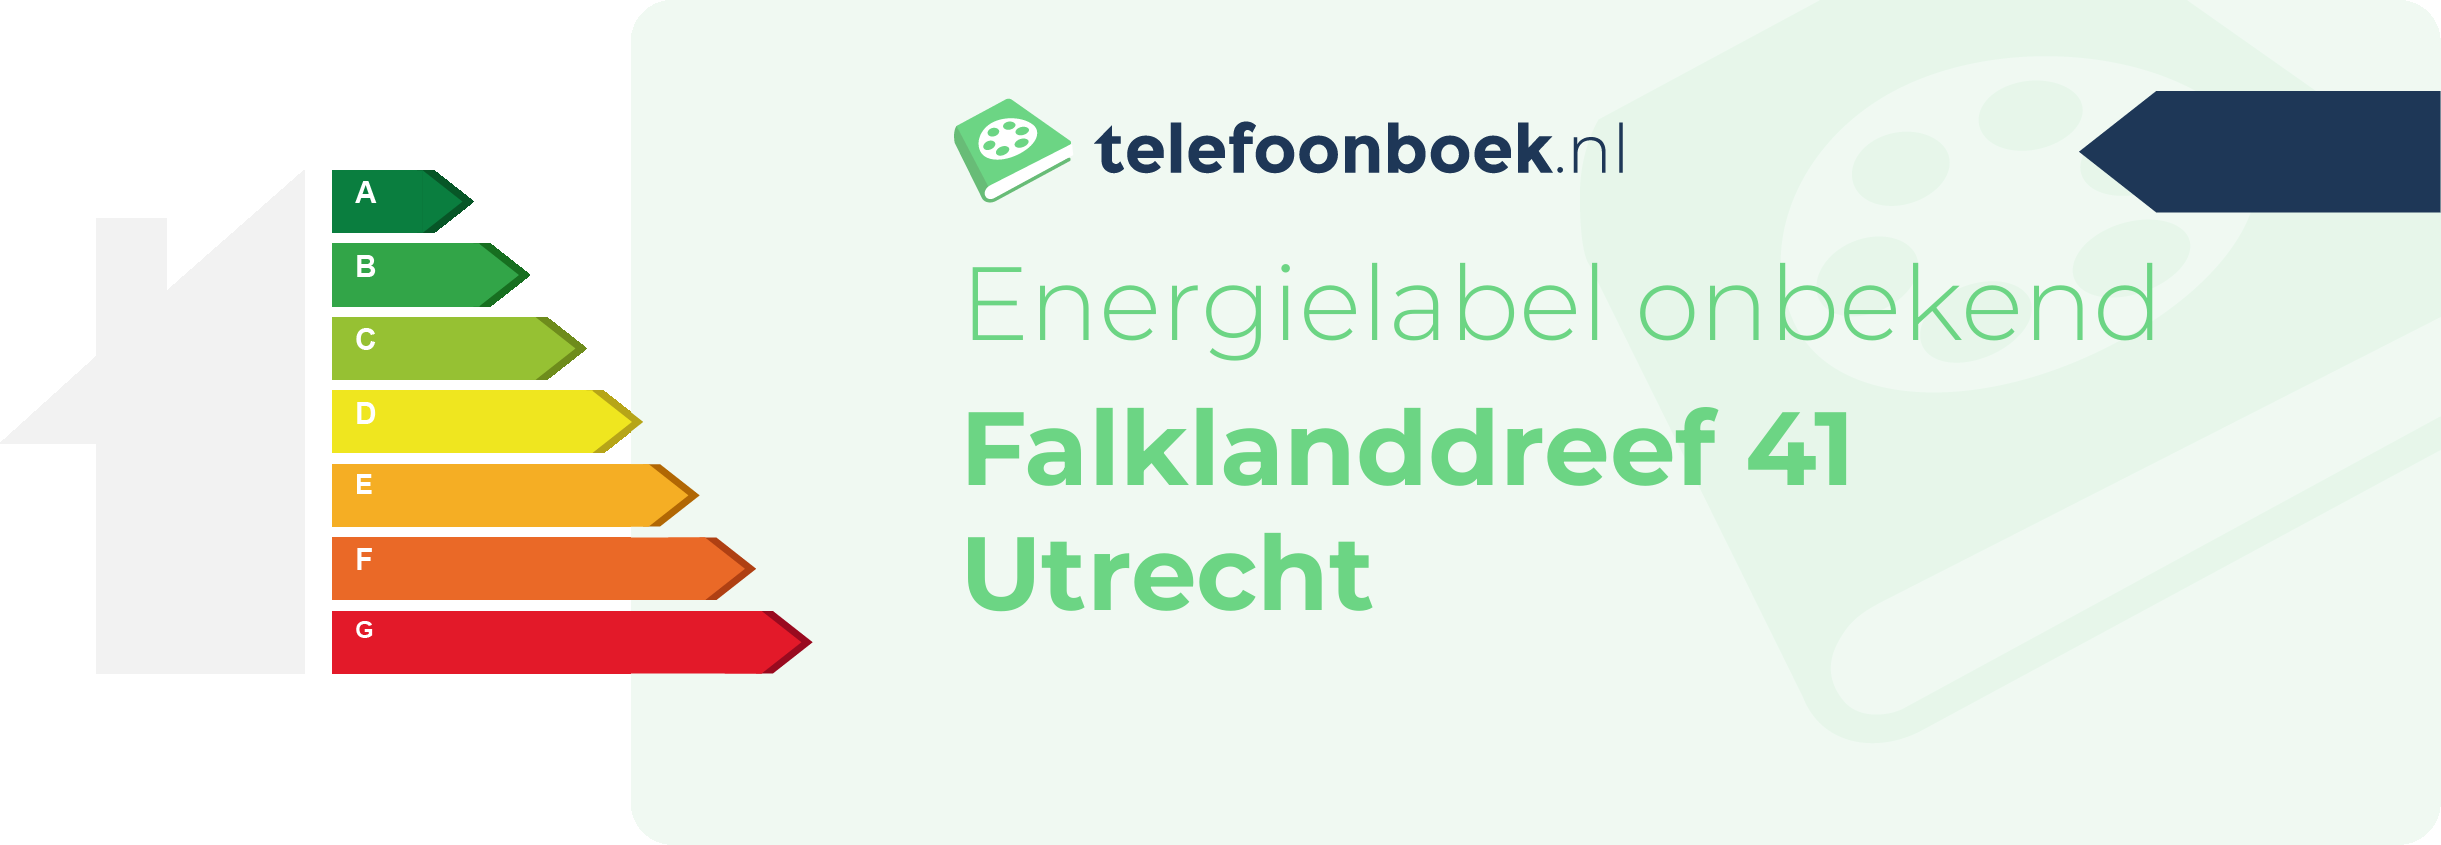 Energielabel Falklanddreef 41 Utrecht